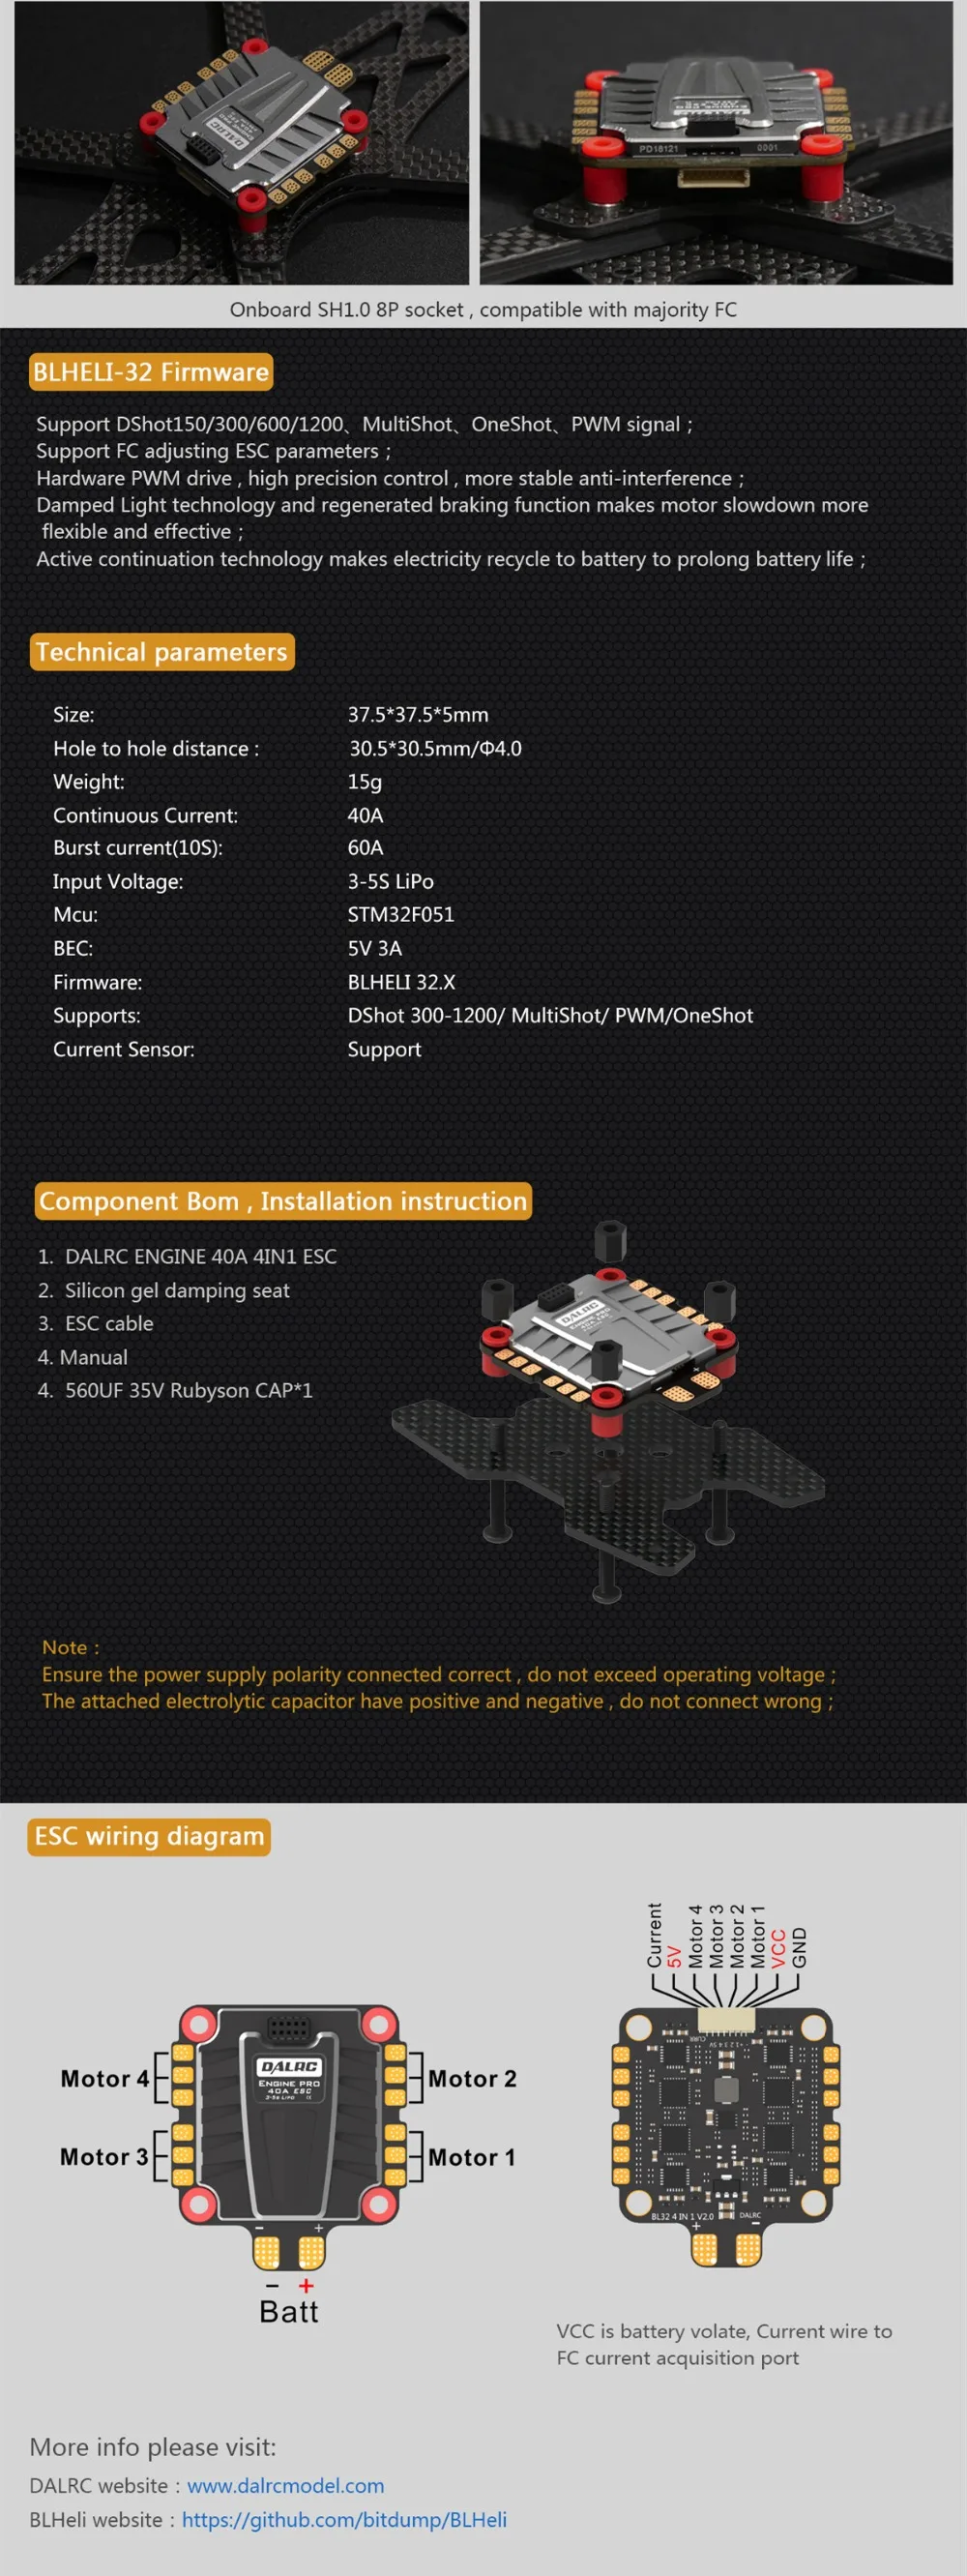 DALRC 4в1 ENGING PRO 40A ESC 3-5S Blheli_32 4 в 1 ESC Бесщеточный DSHOT1200 готов w/5 V BEC обновленная версия 40A для FPV RC Drone